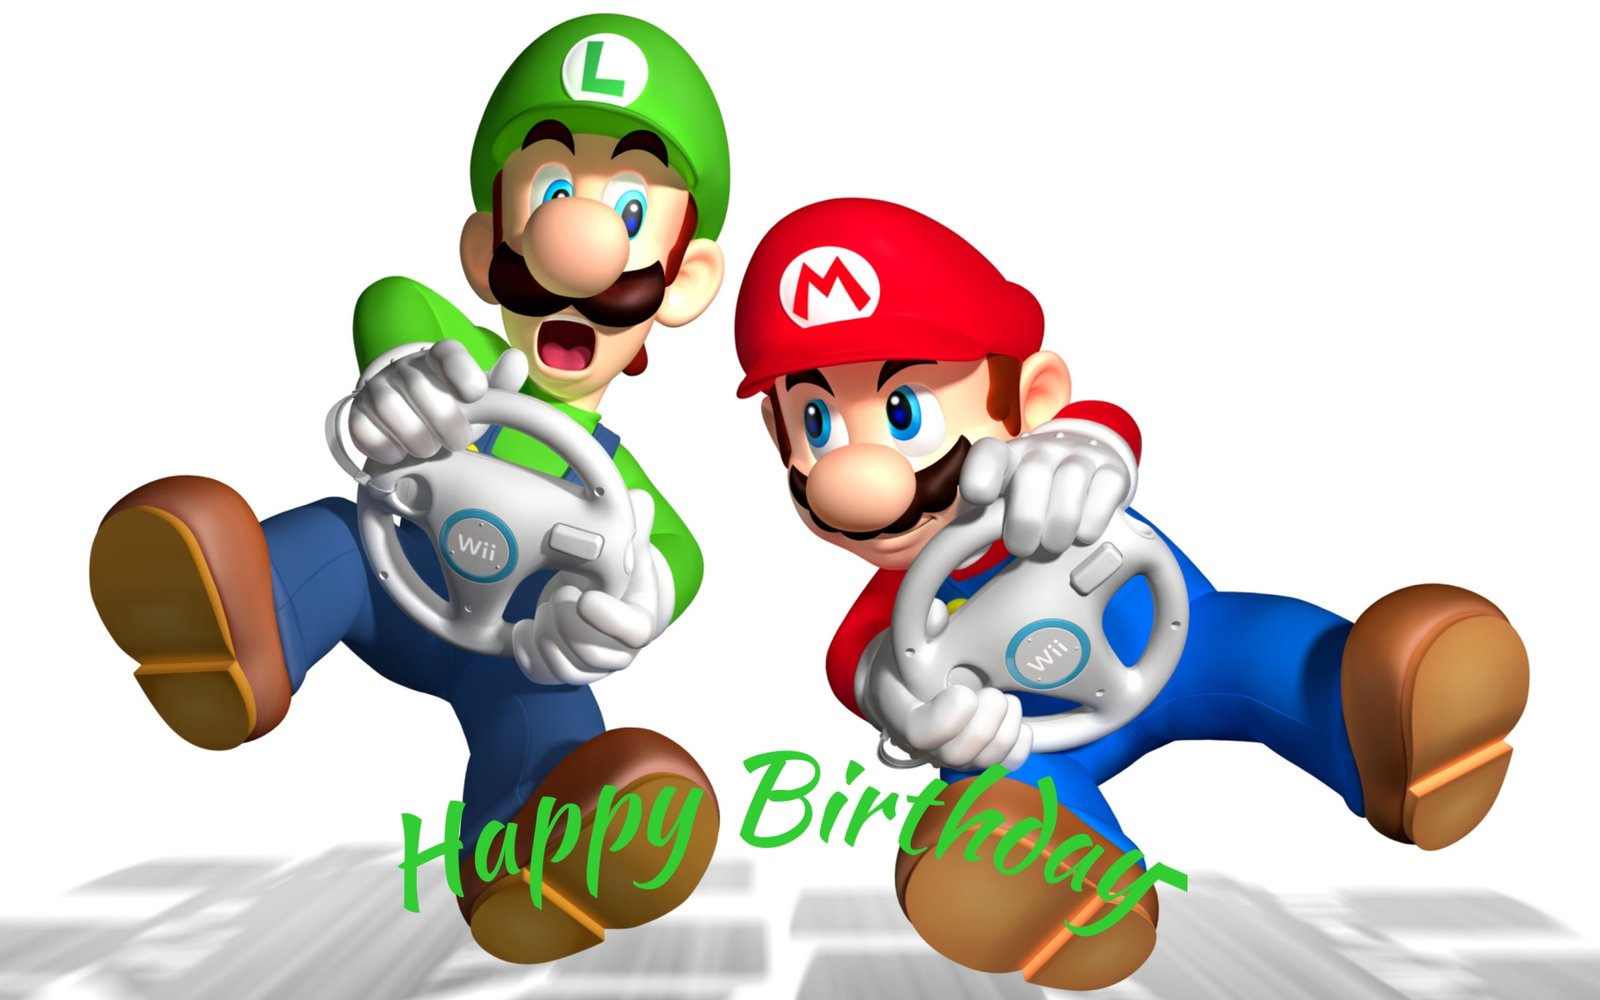 Mario and Luigi cards